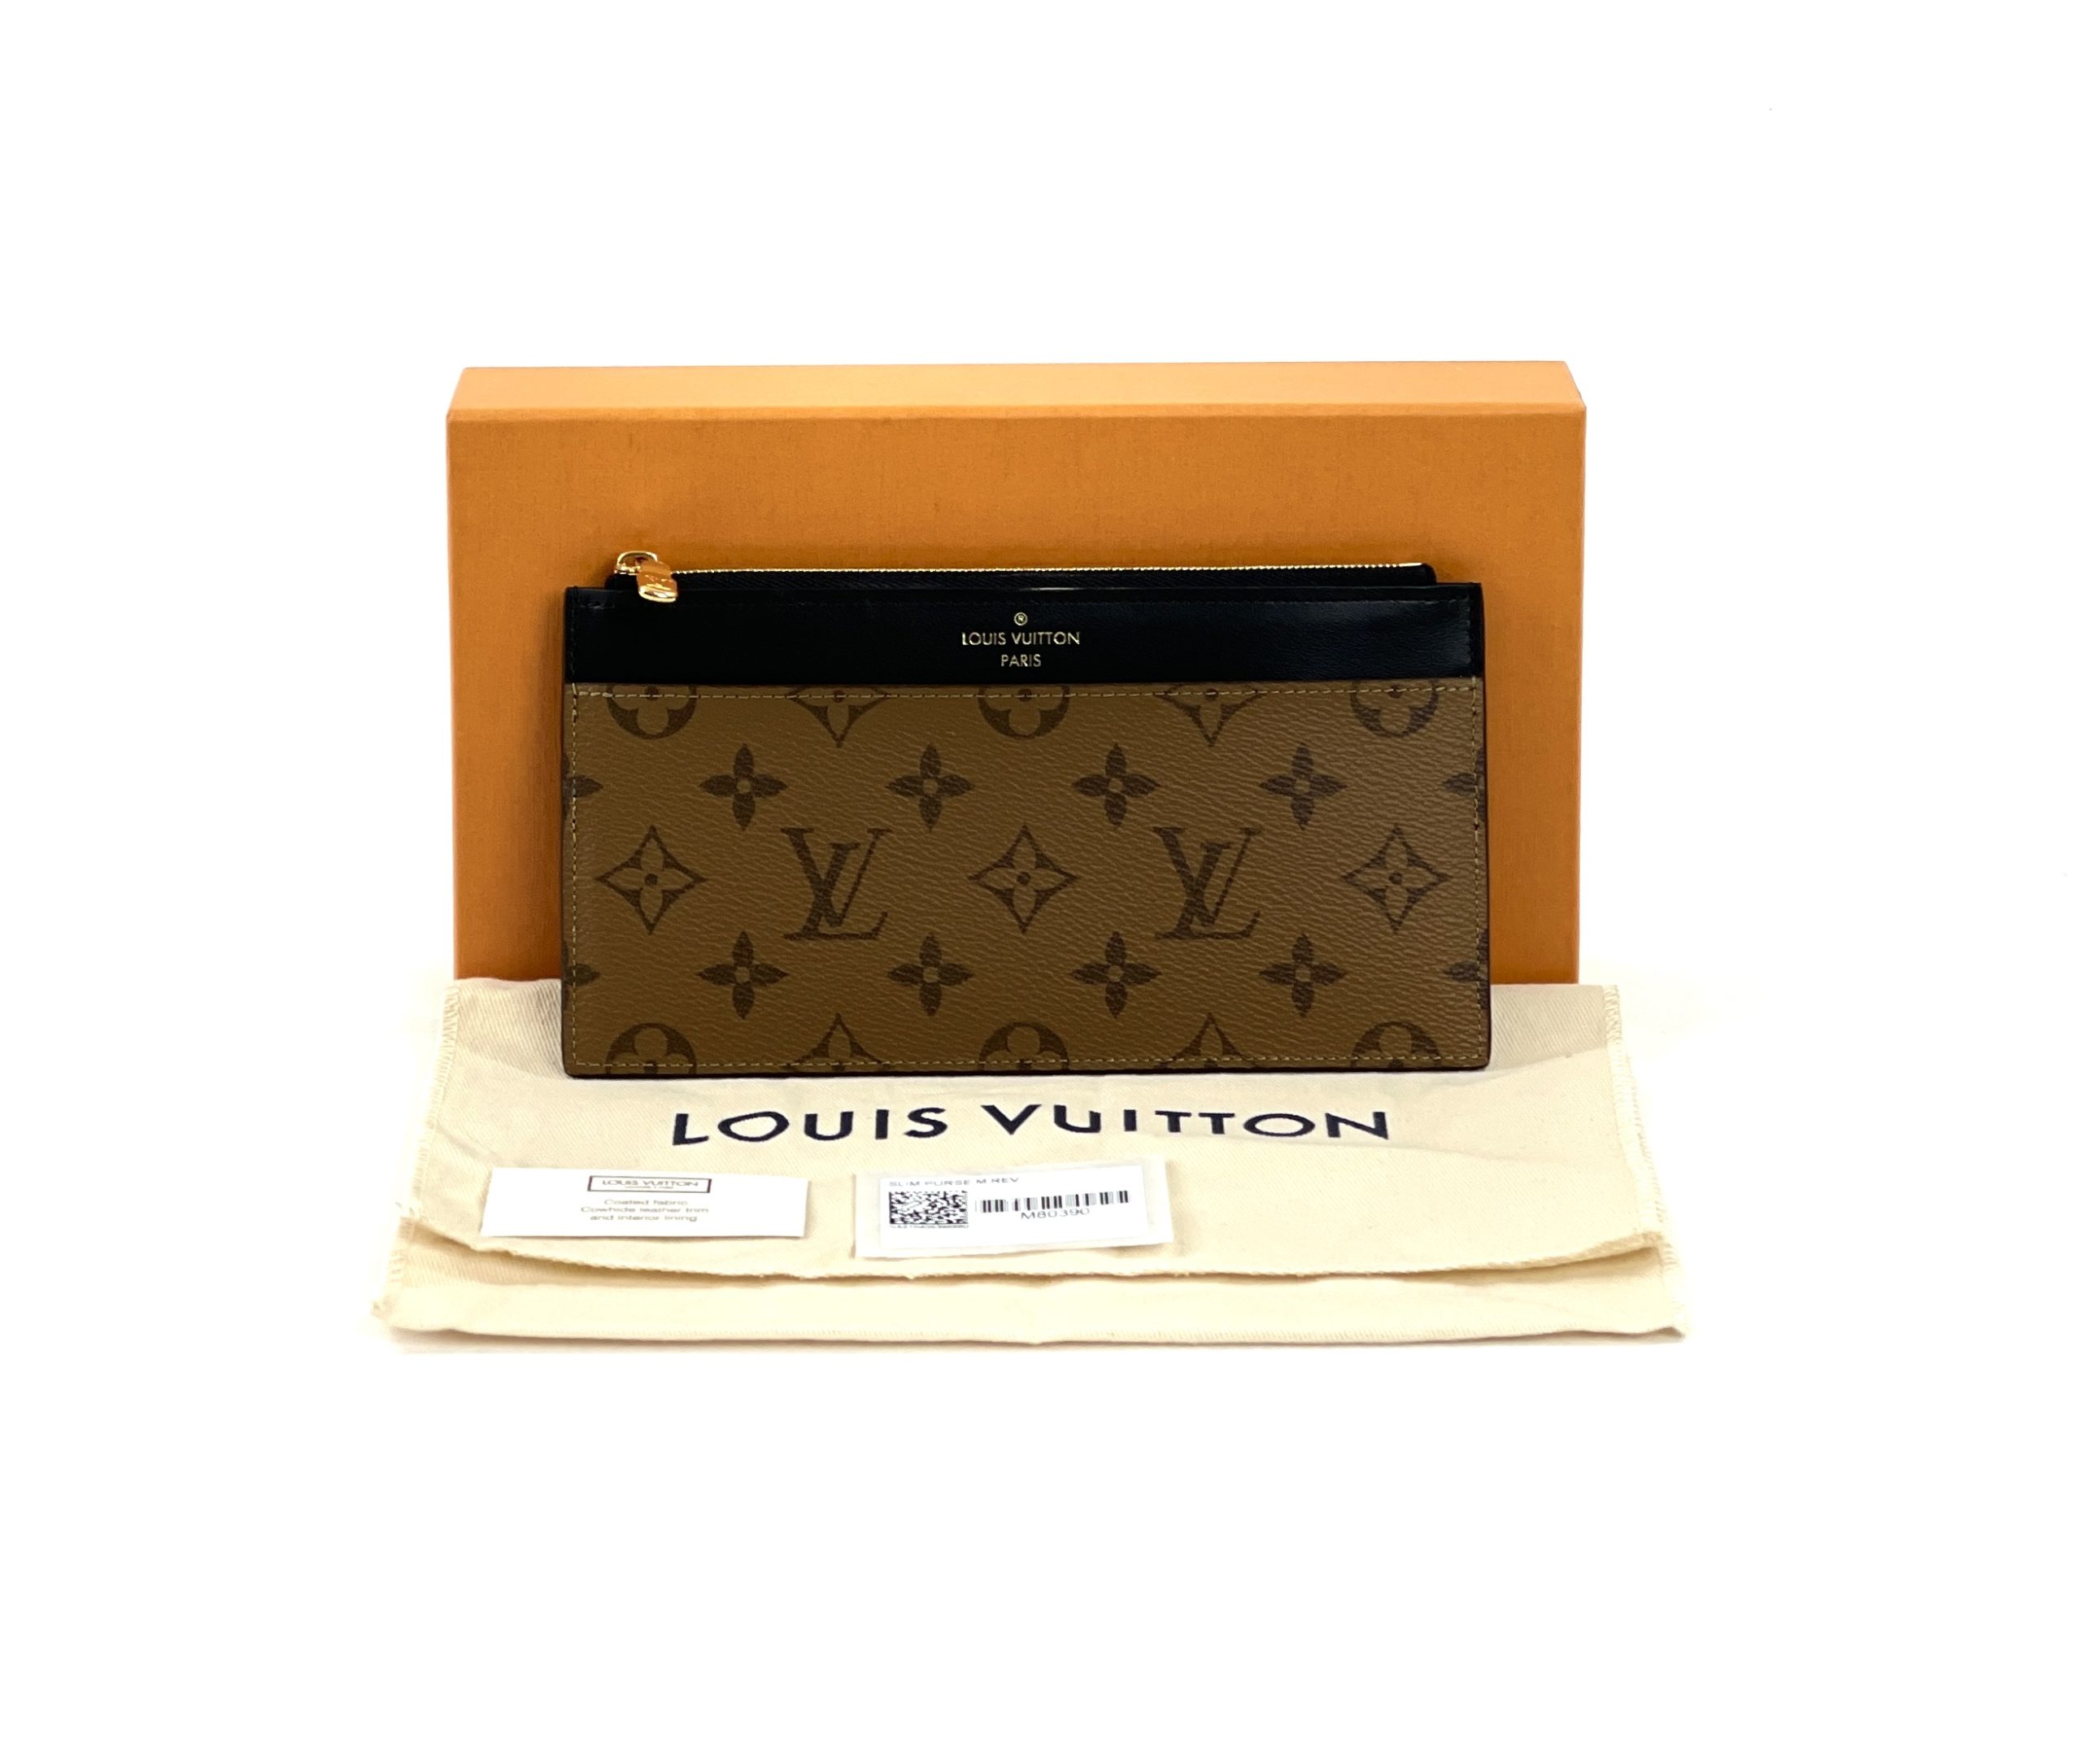 Louis Vuitton Slim Purse Monogram Reverse